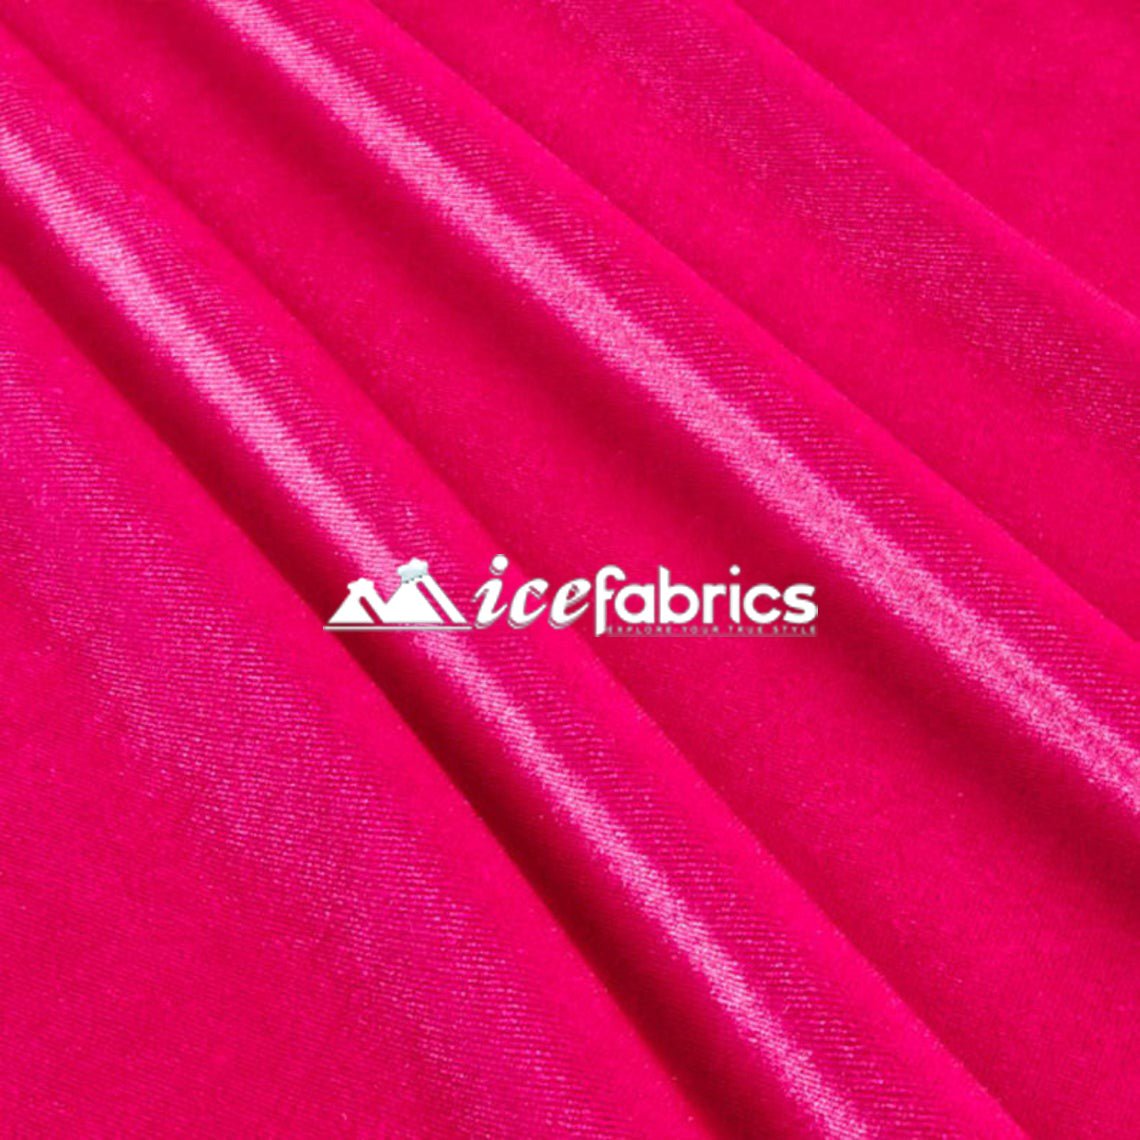 Hot Pink Velvet Fabric By The Yard | 4 Way StretchVelvet FabricICE FABRICSICE FABRICSBy The Yard (58" Wide)Hot Pink Velvet Fabric By The Yard | 4 Way Stretch ICE FABRICS